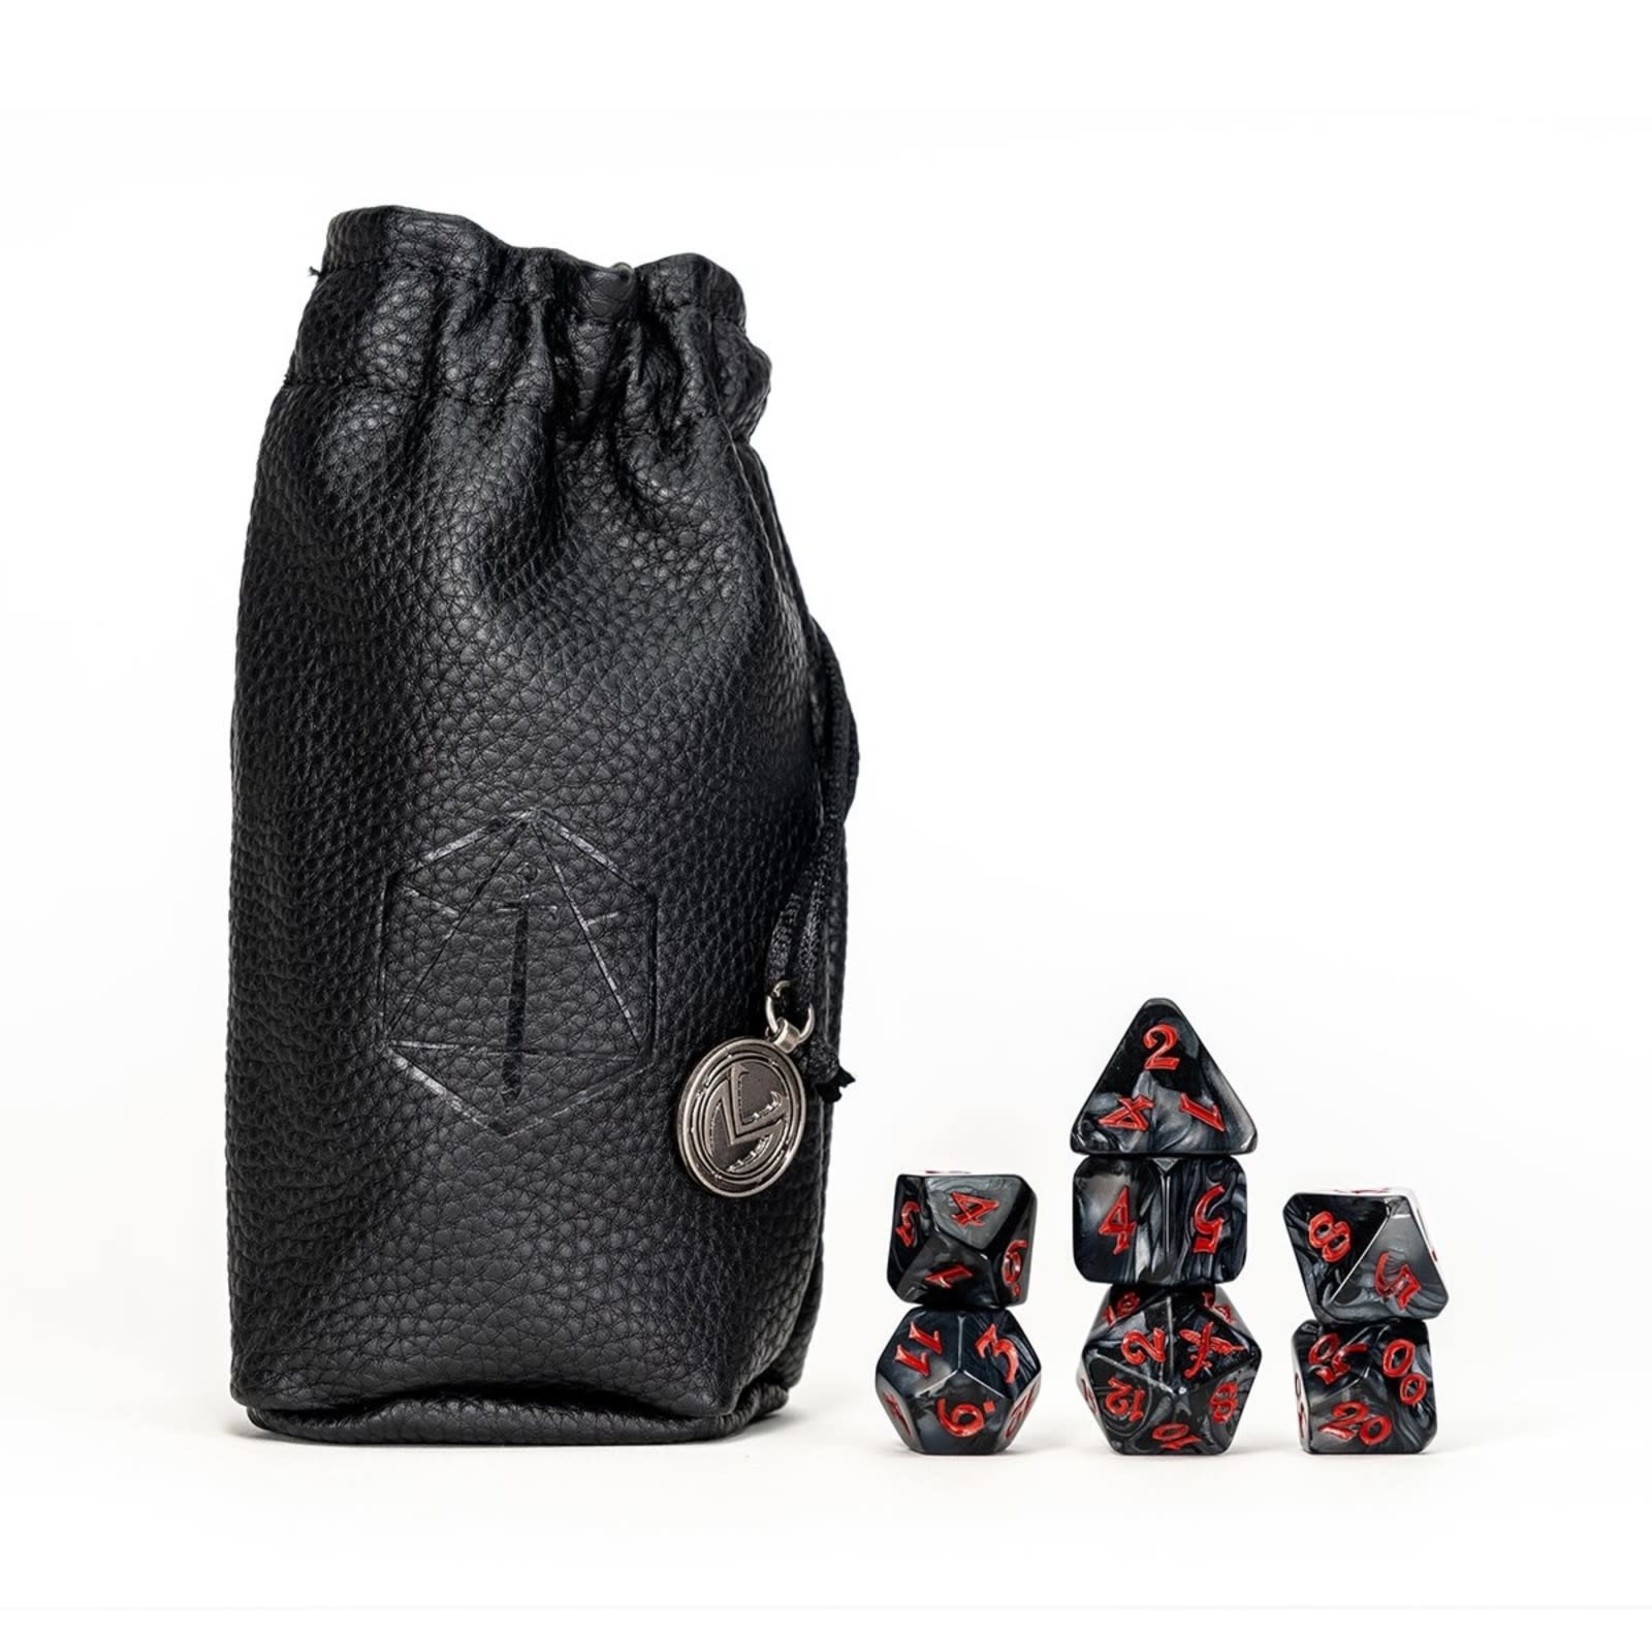 Darrington Press Guild Vox Machina Vax'ildan Black with Red Polyhedral 7 die set